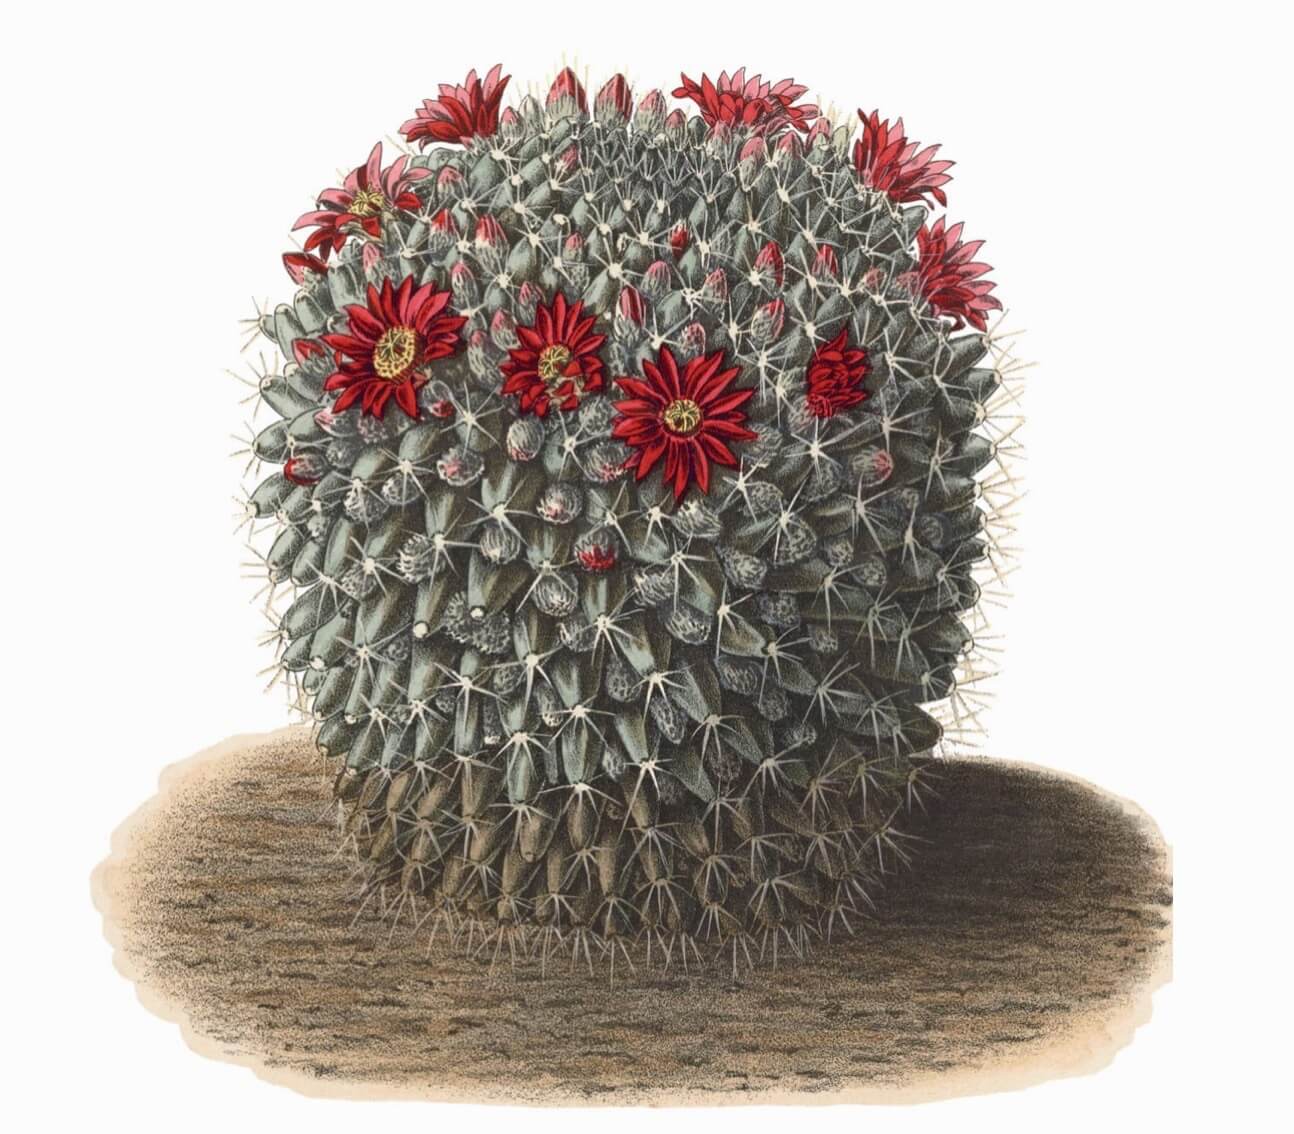 Pincushion cactus Mammillaria species aka powder puff cactus, nipple cactus